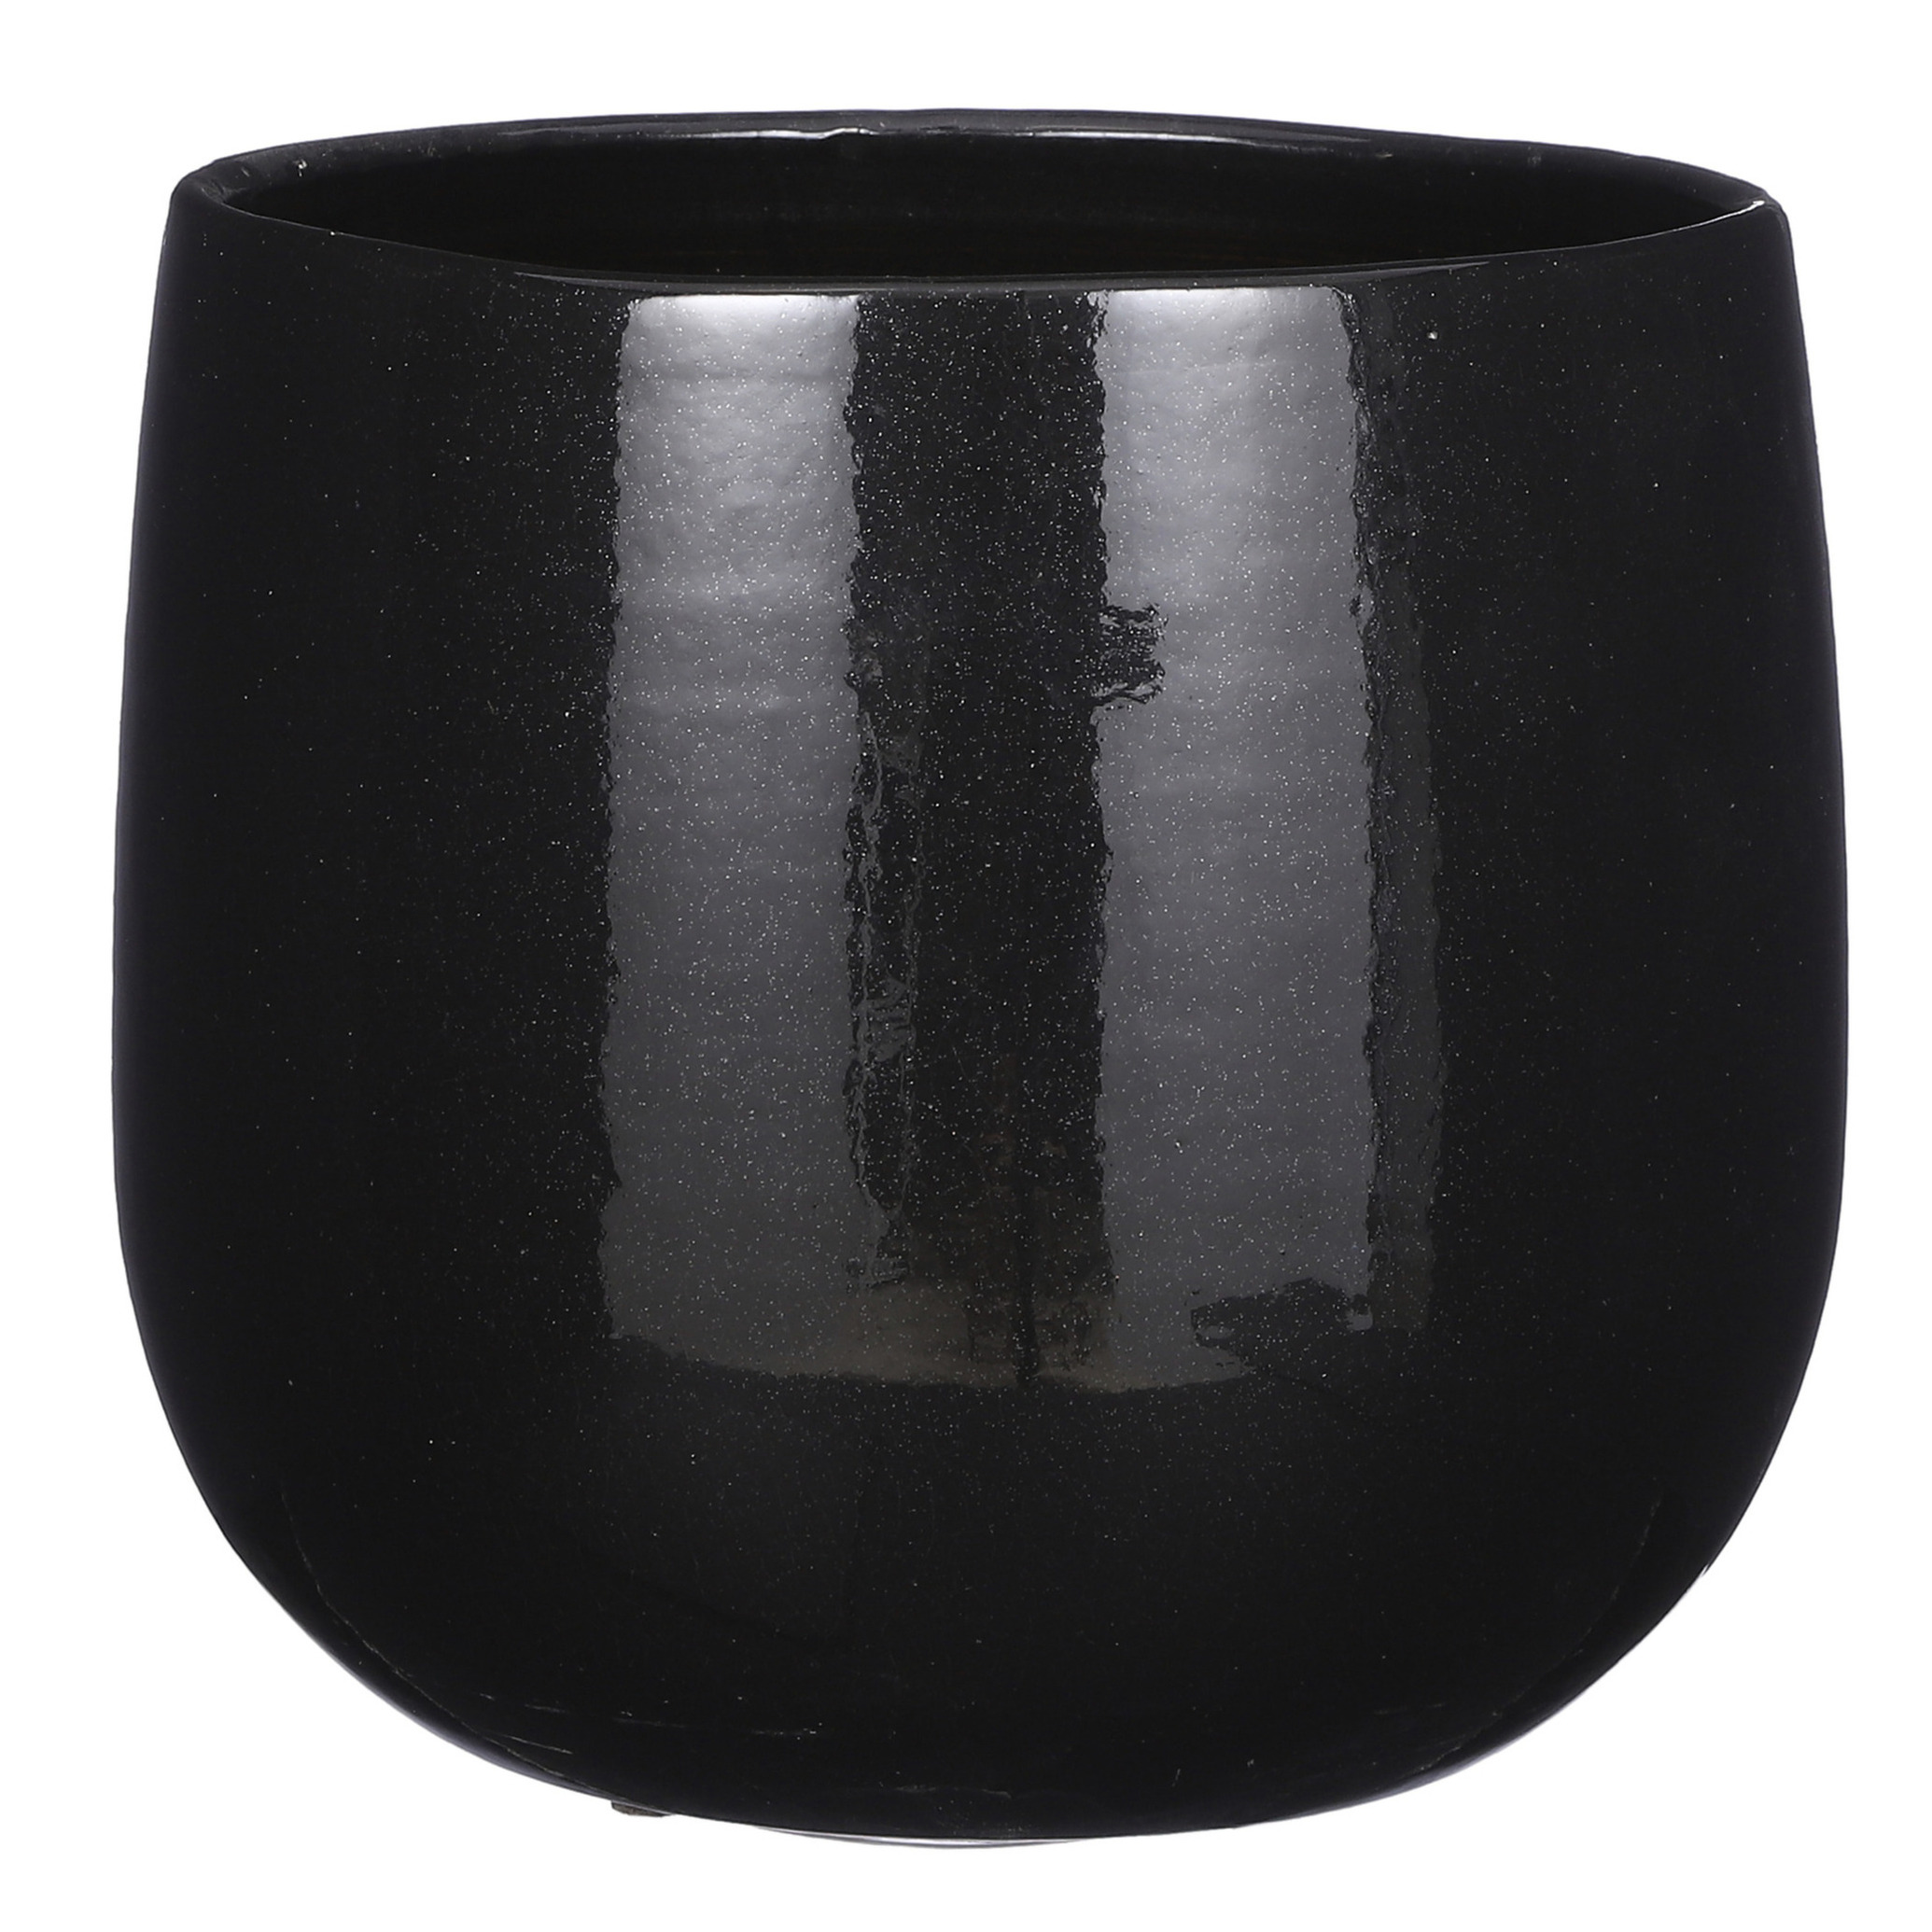 Plantenpot-bloempot keramiek zwart speels licht gevlekt patroon D25-H20 cm